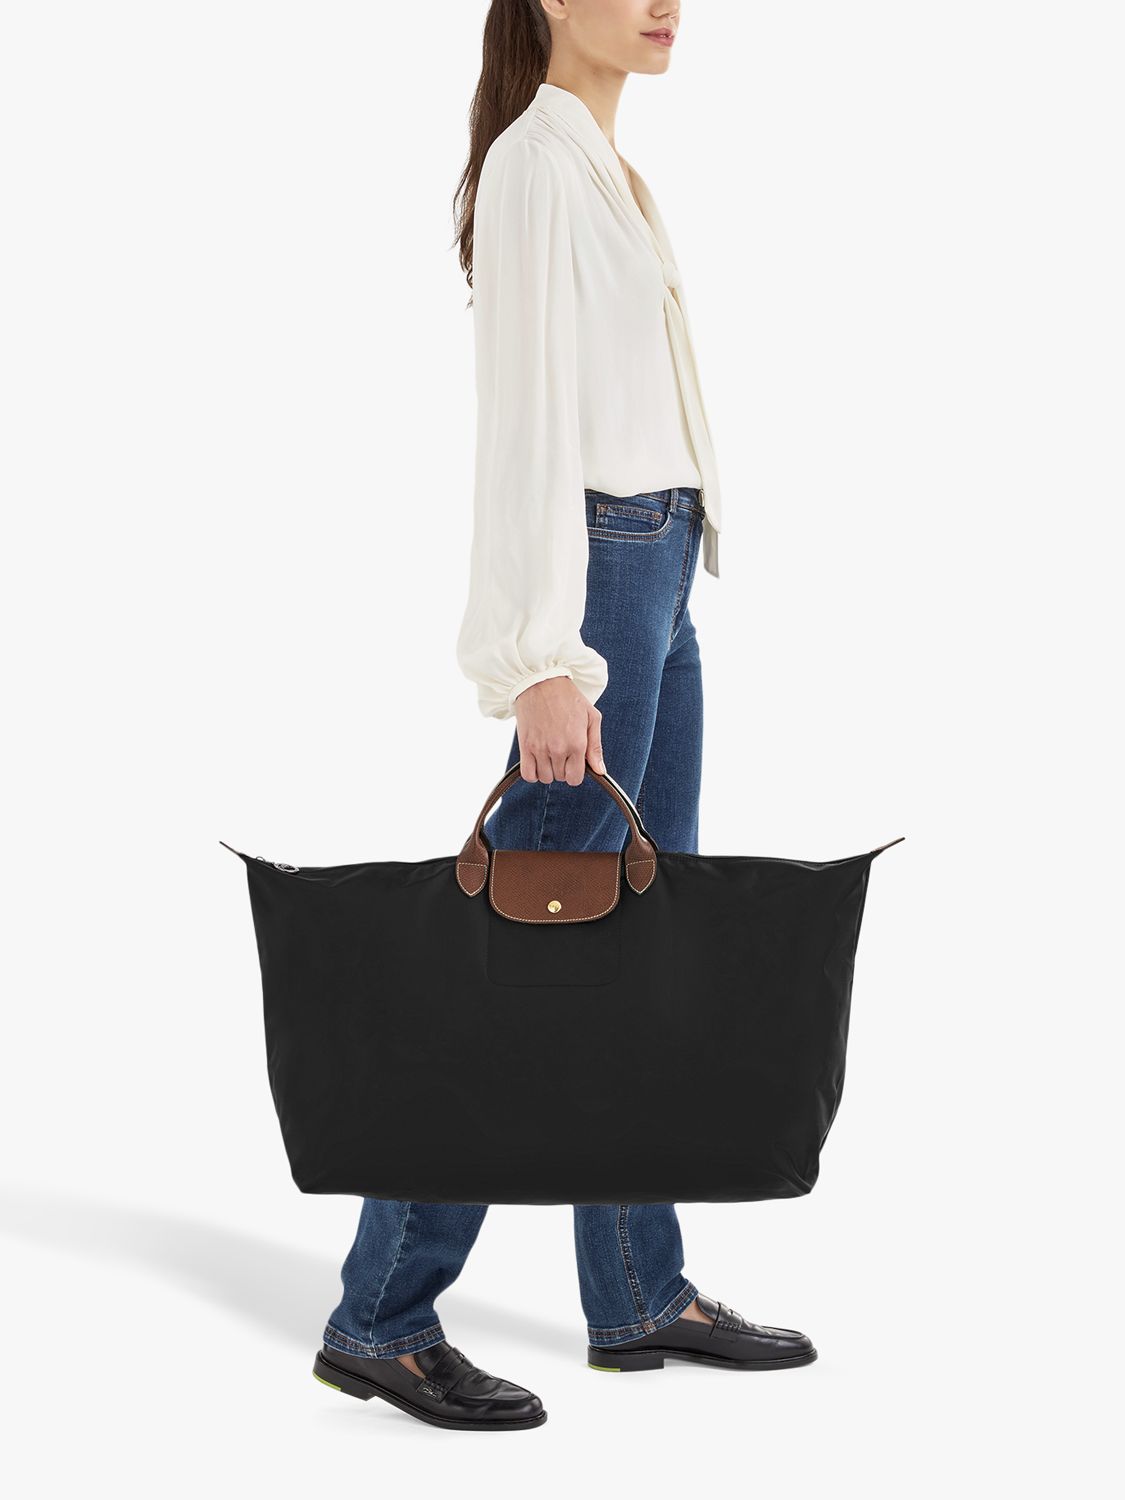  Longchamp Le Pliage Large Travel Bag, Black, 17.75 x 13.75 x  9 : Clothing, Shoes & Jewelry